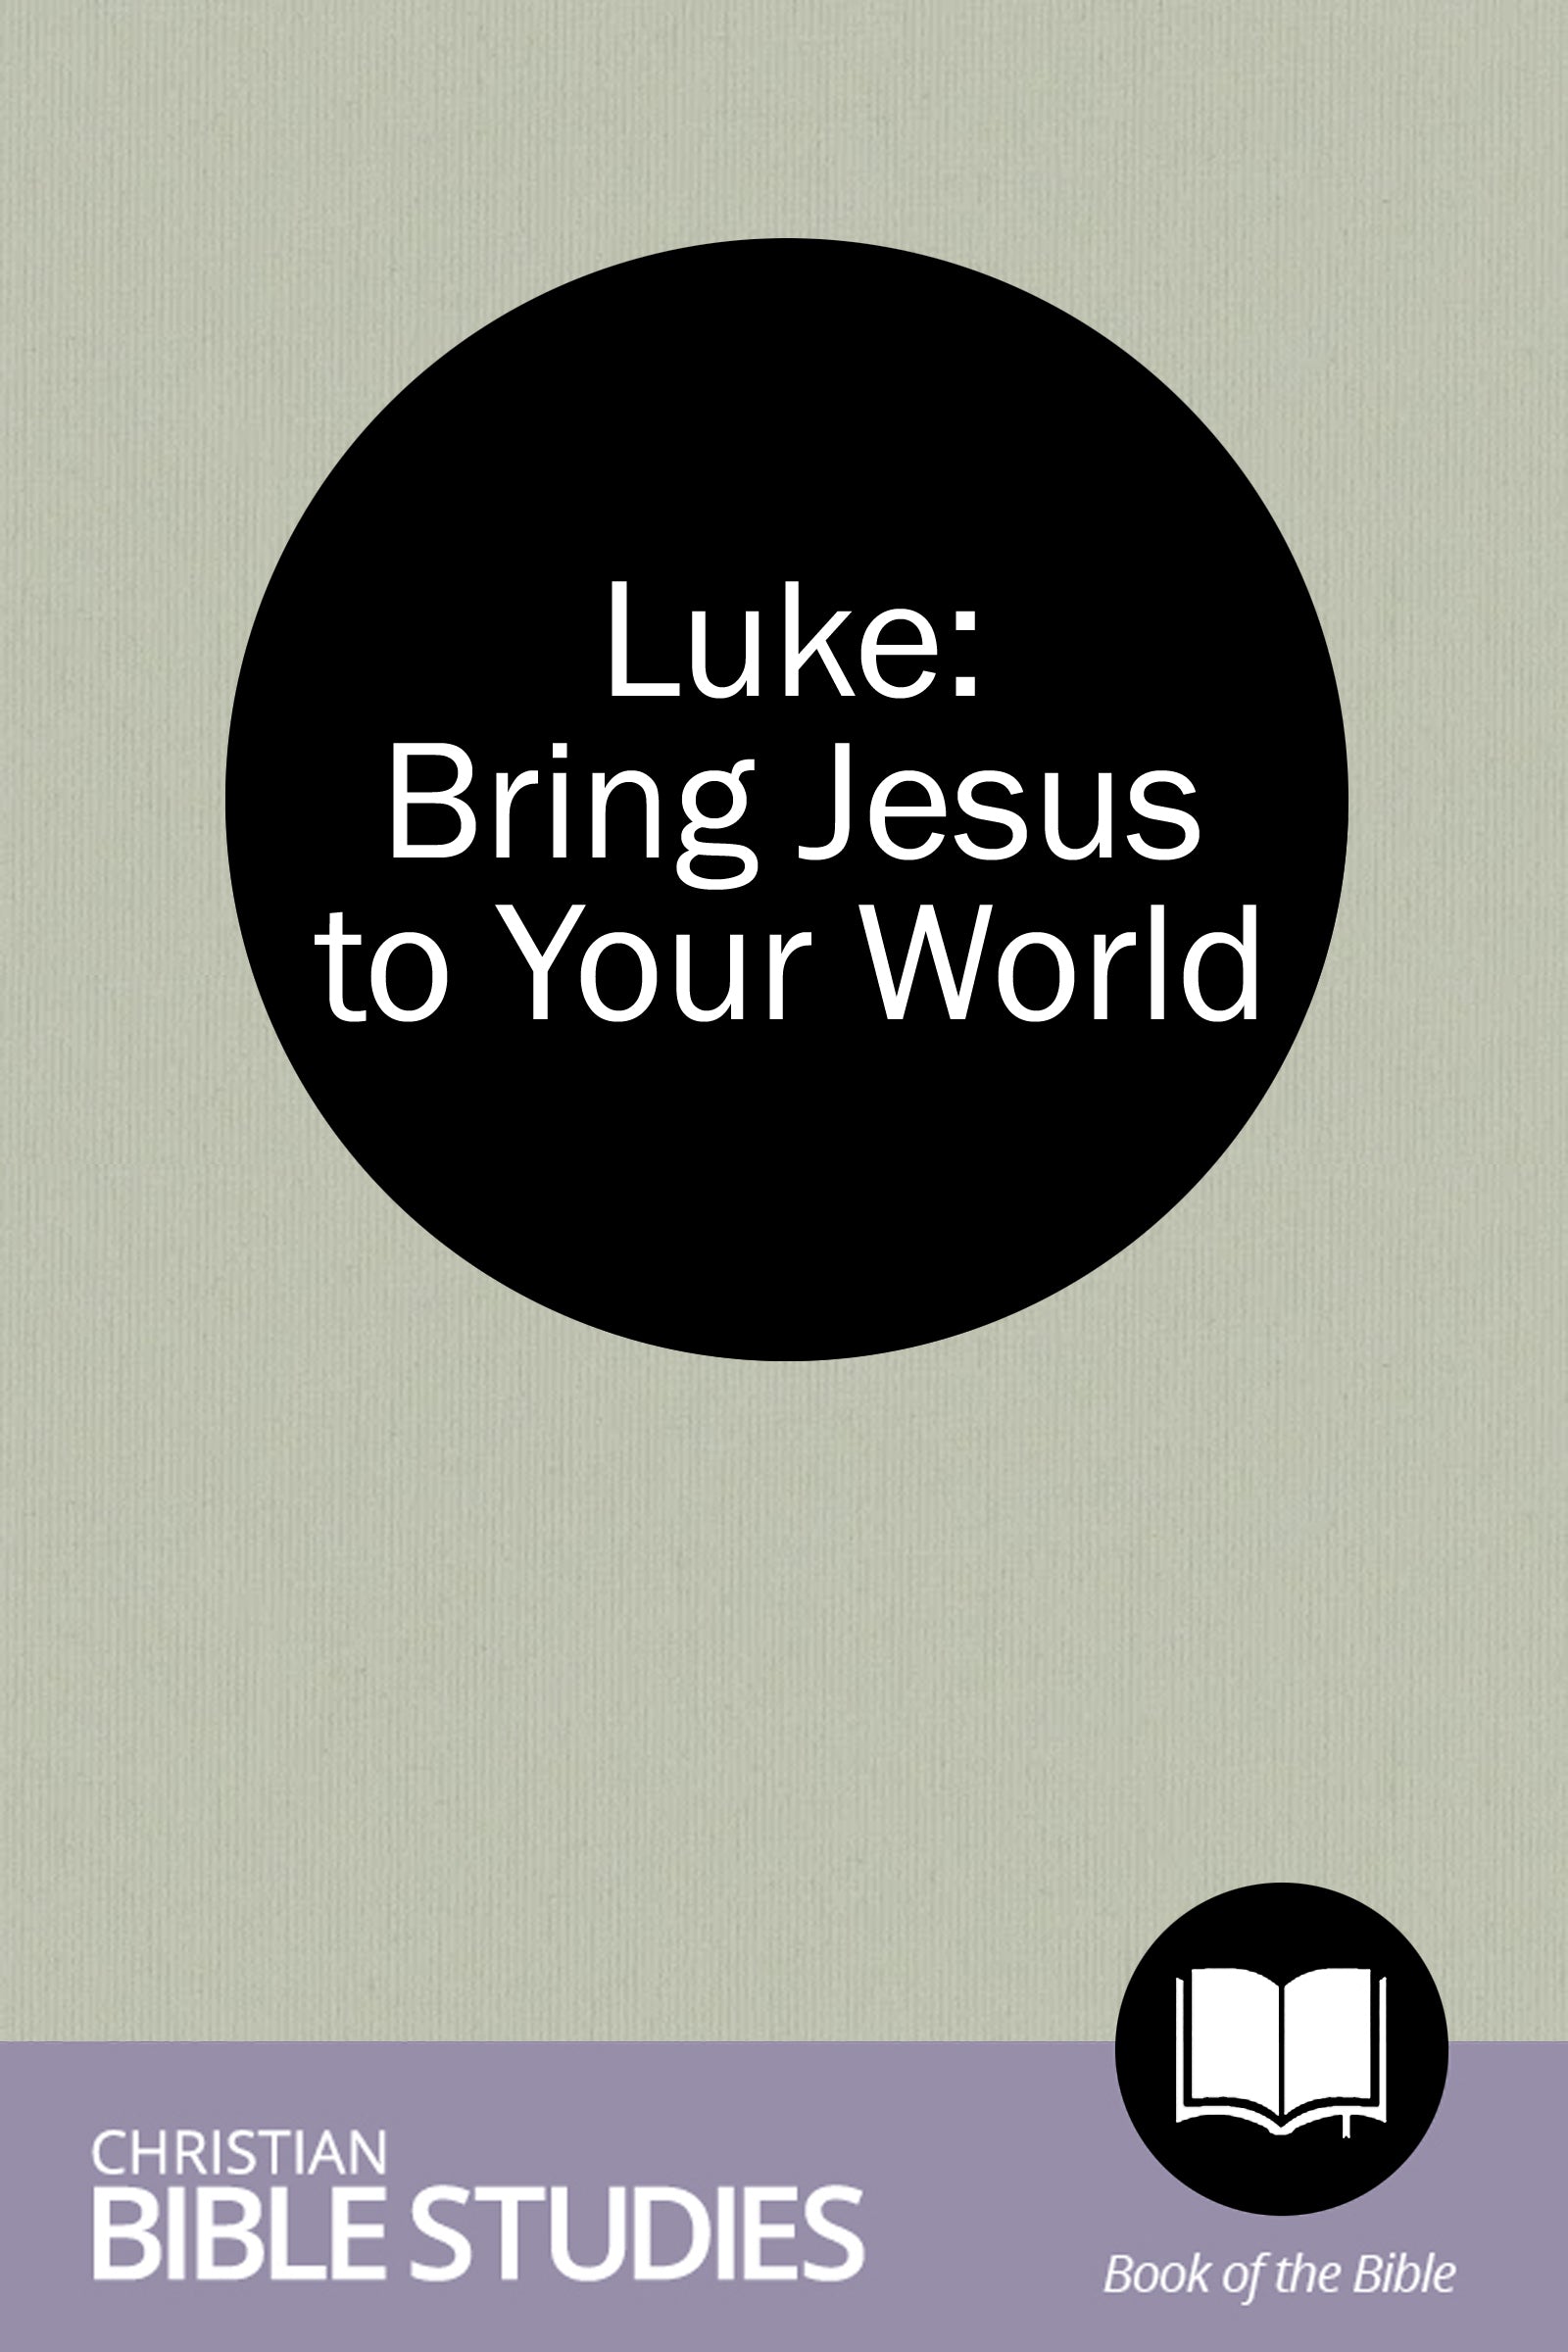 Luke: Bring Jesus to Your World